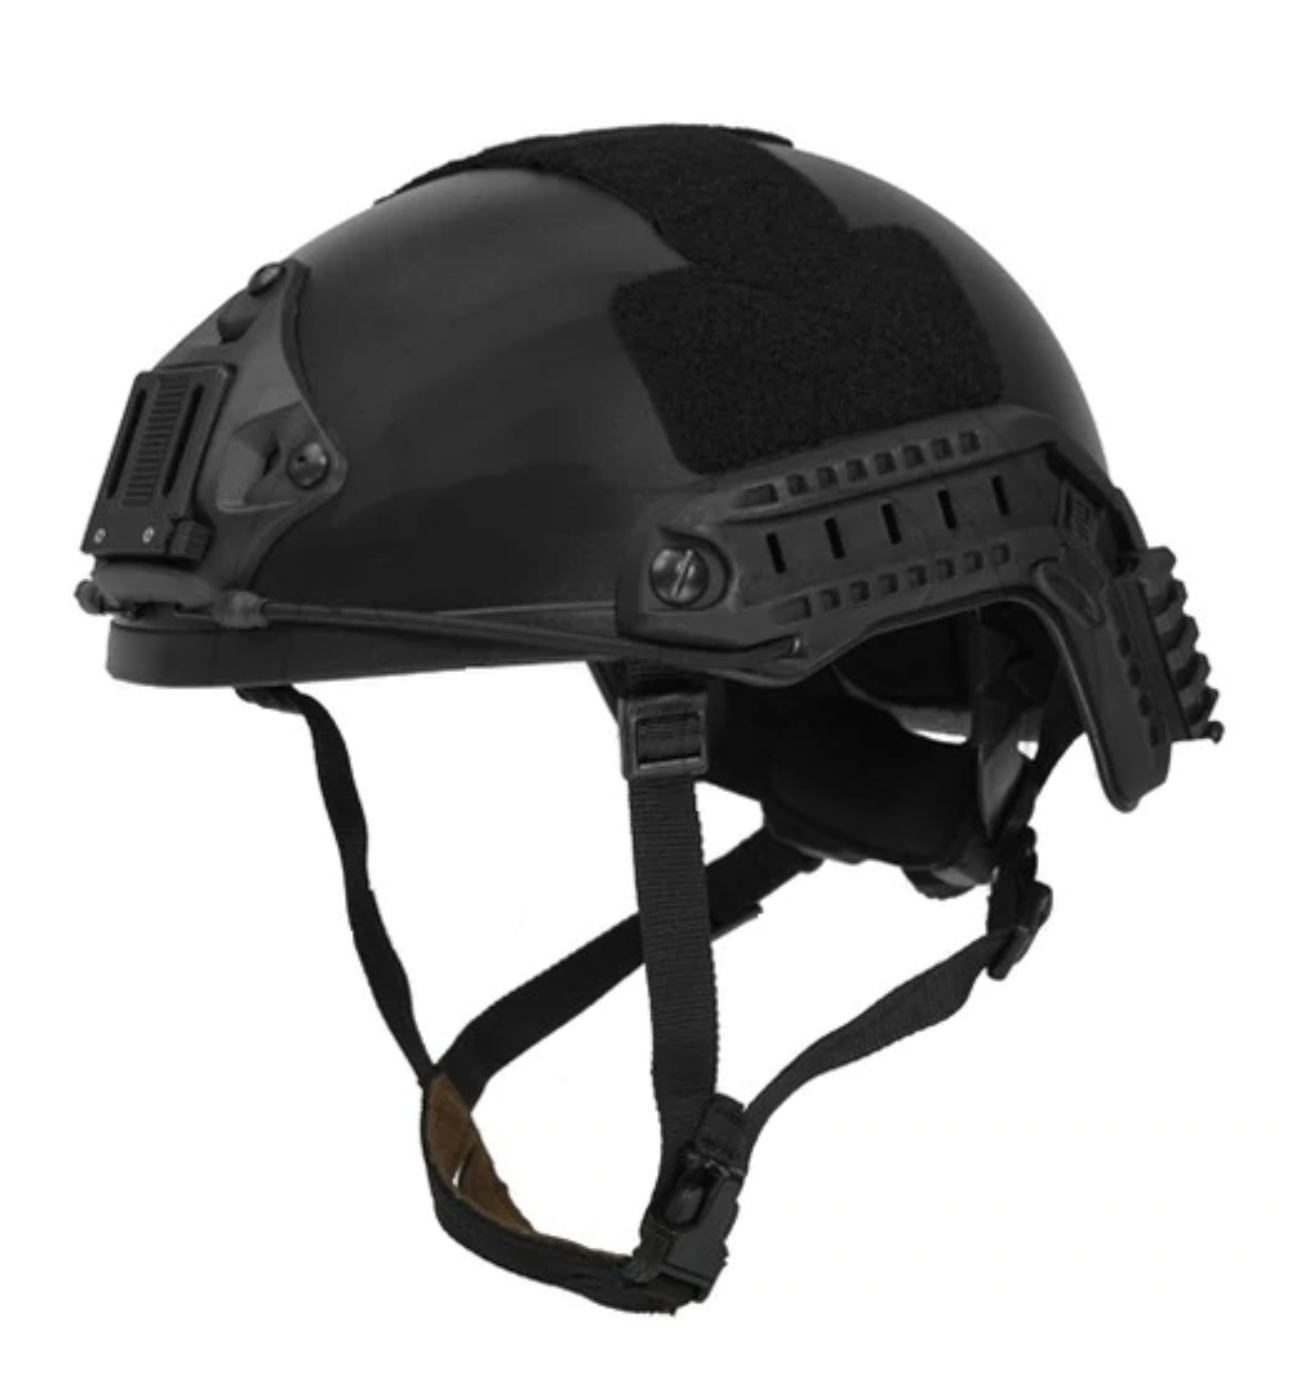 Krousis Defense Maritime Ballistic Style Helmet